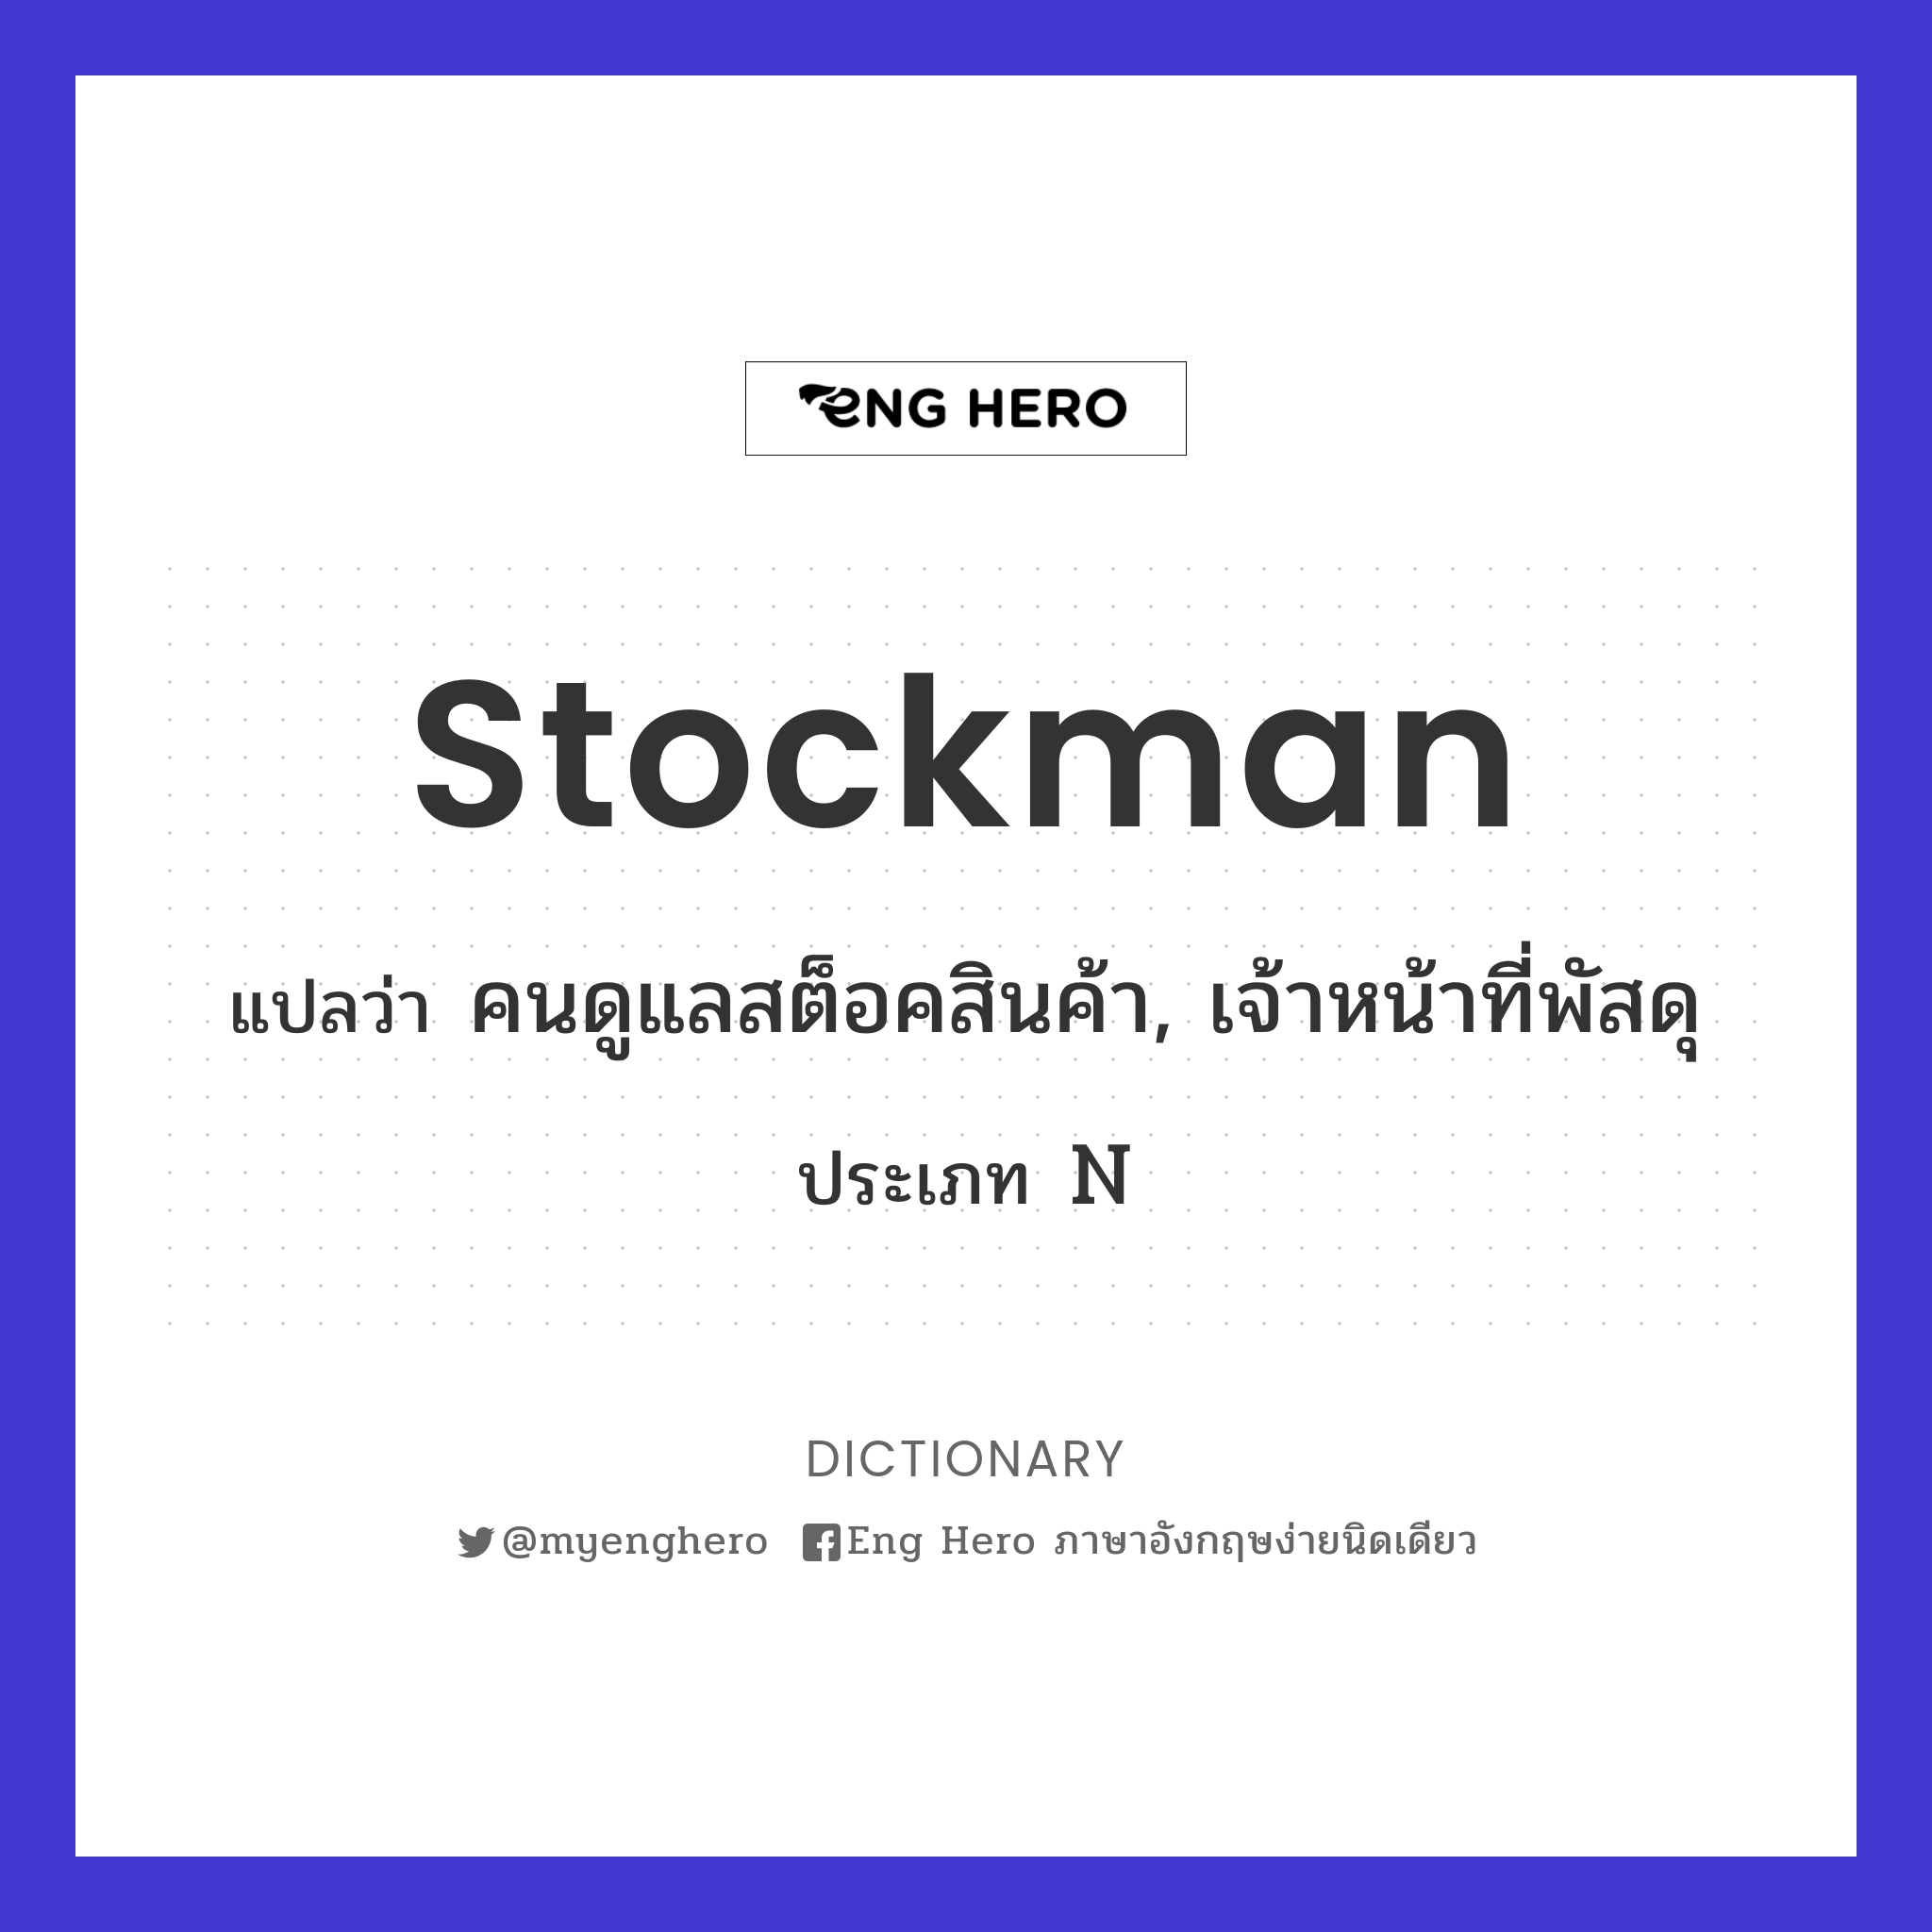 stockman